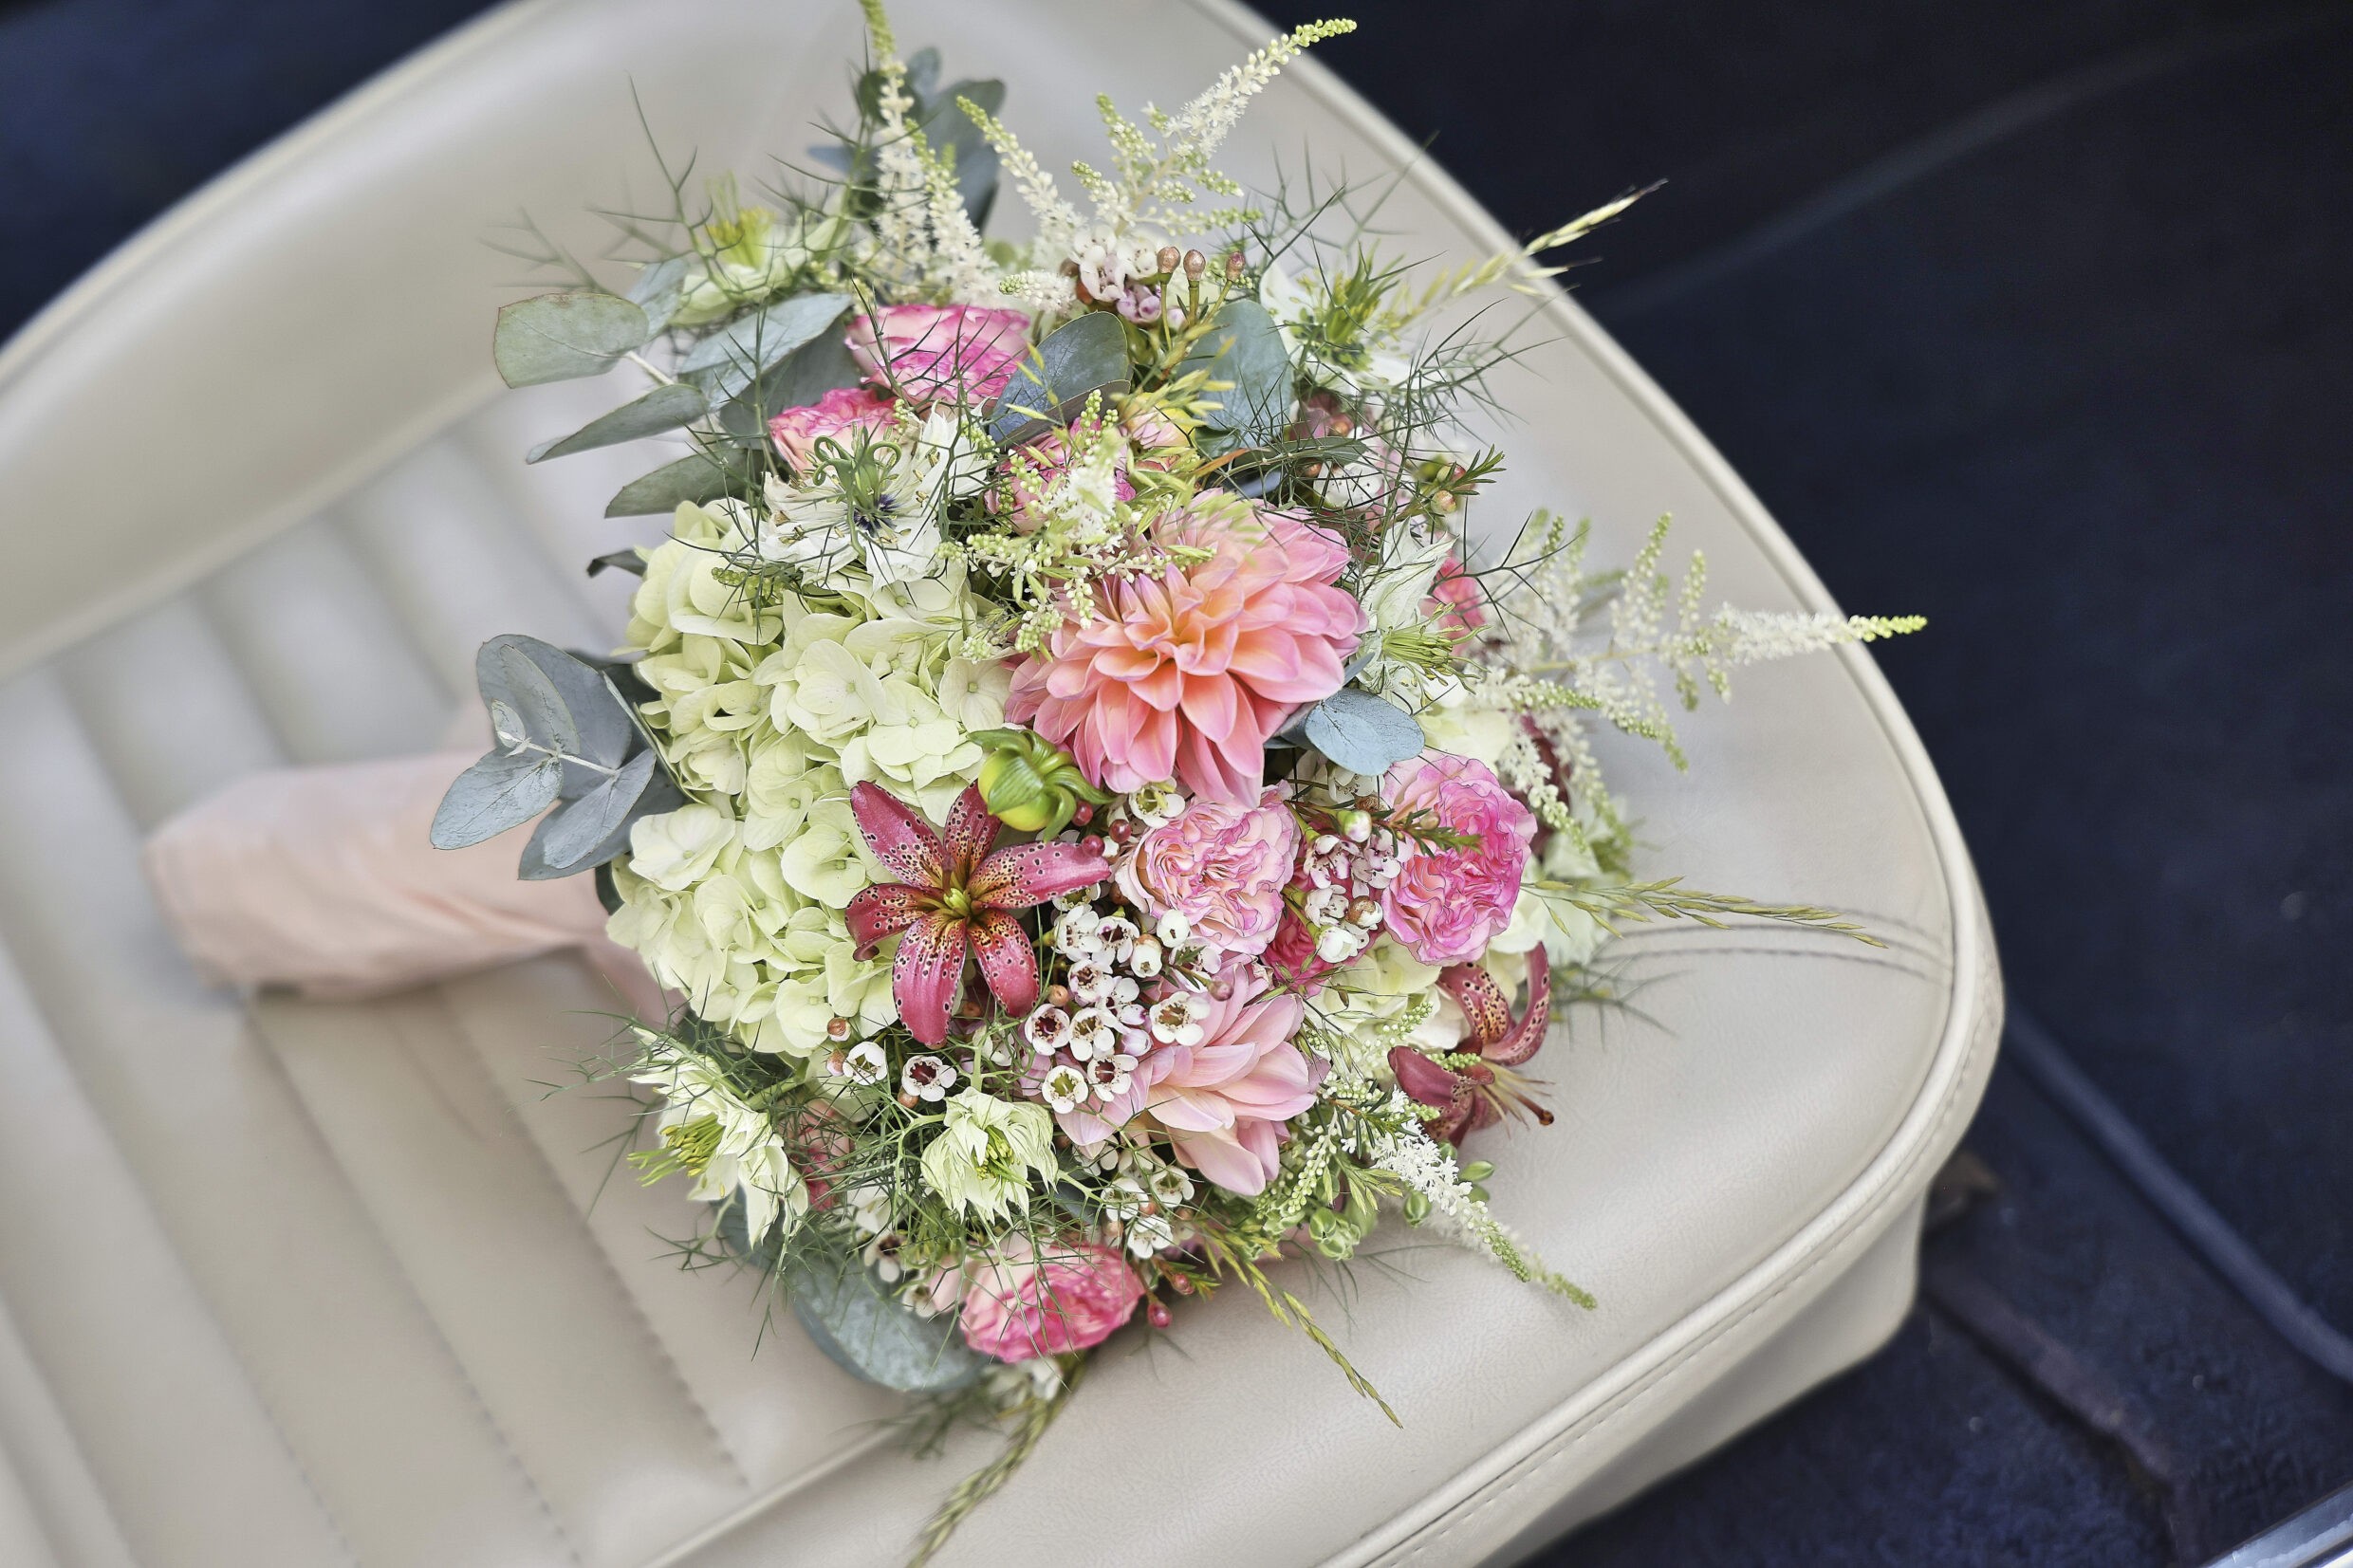 Summer flowers for your wedding - order online